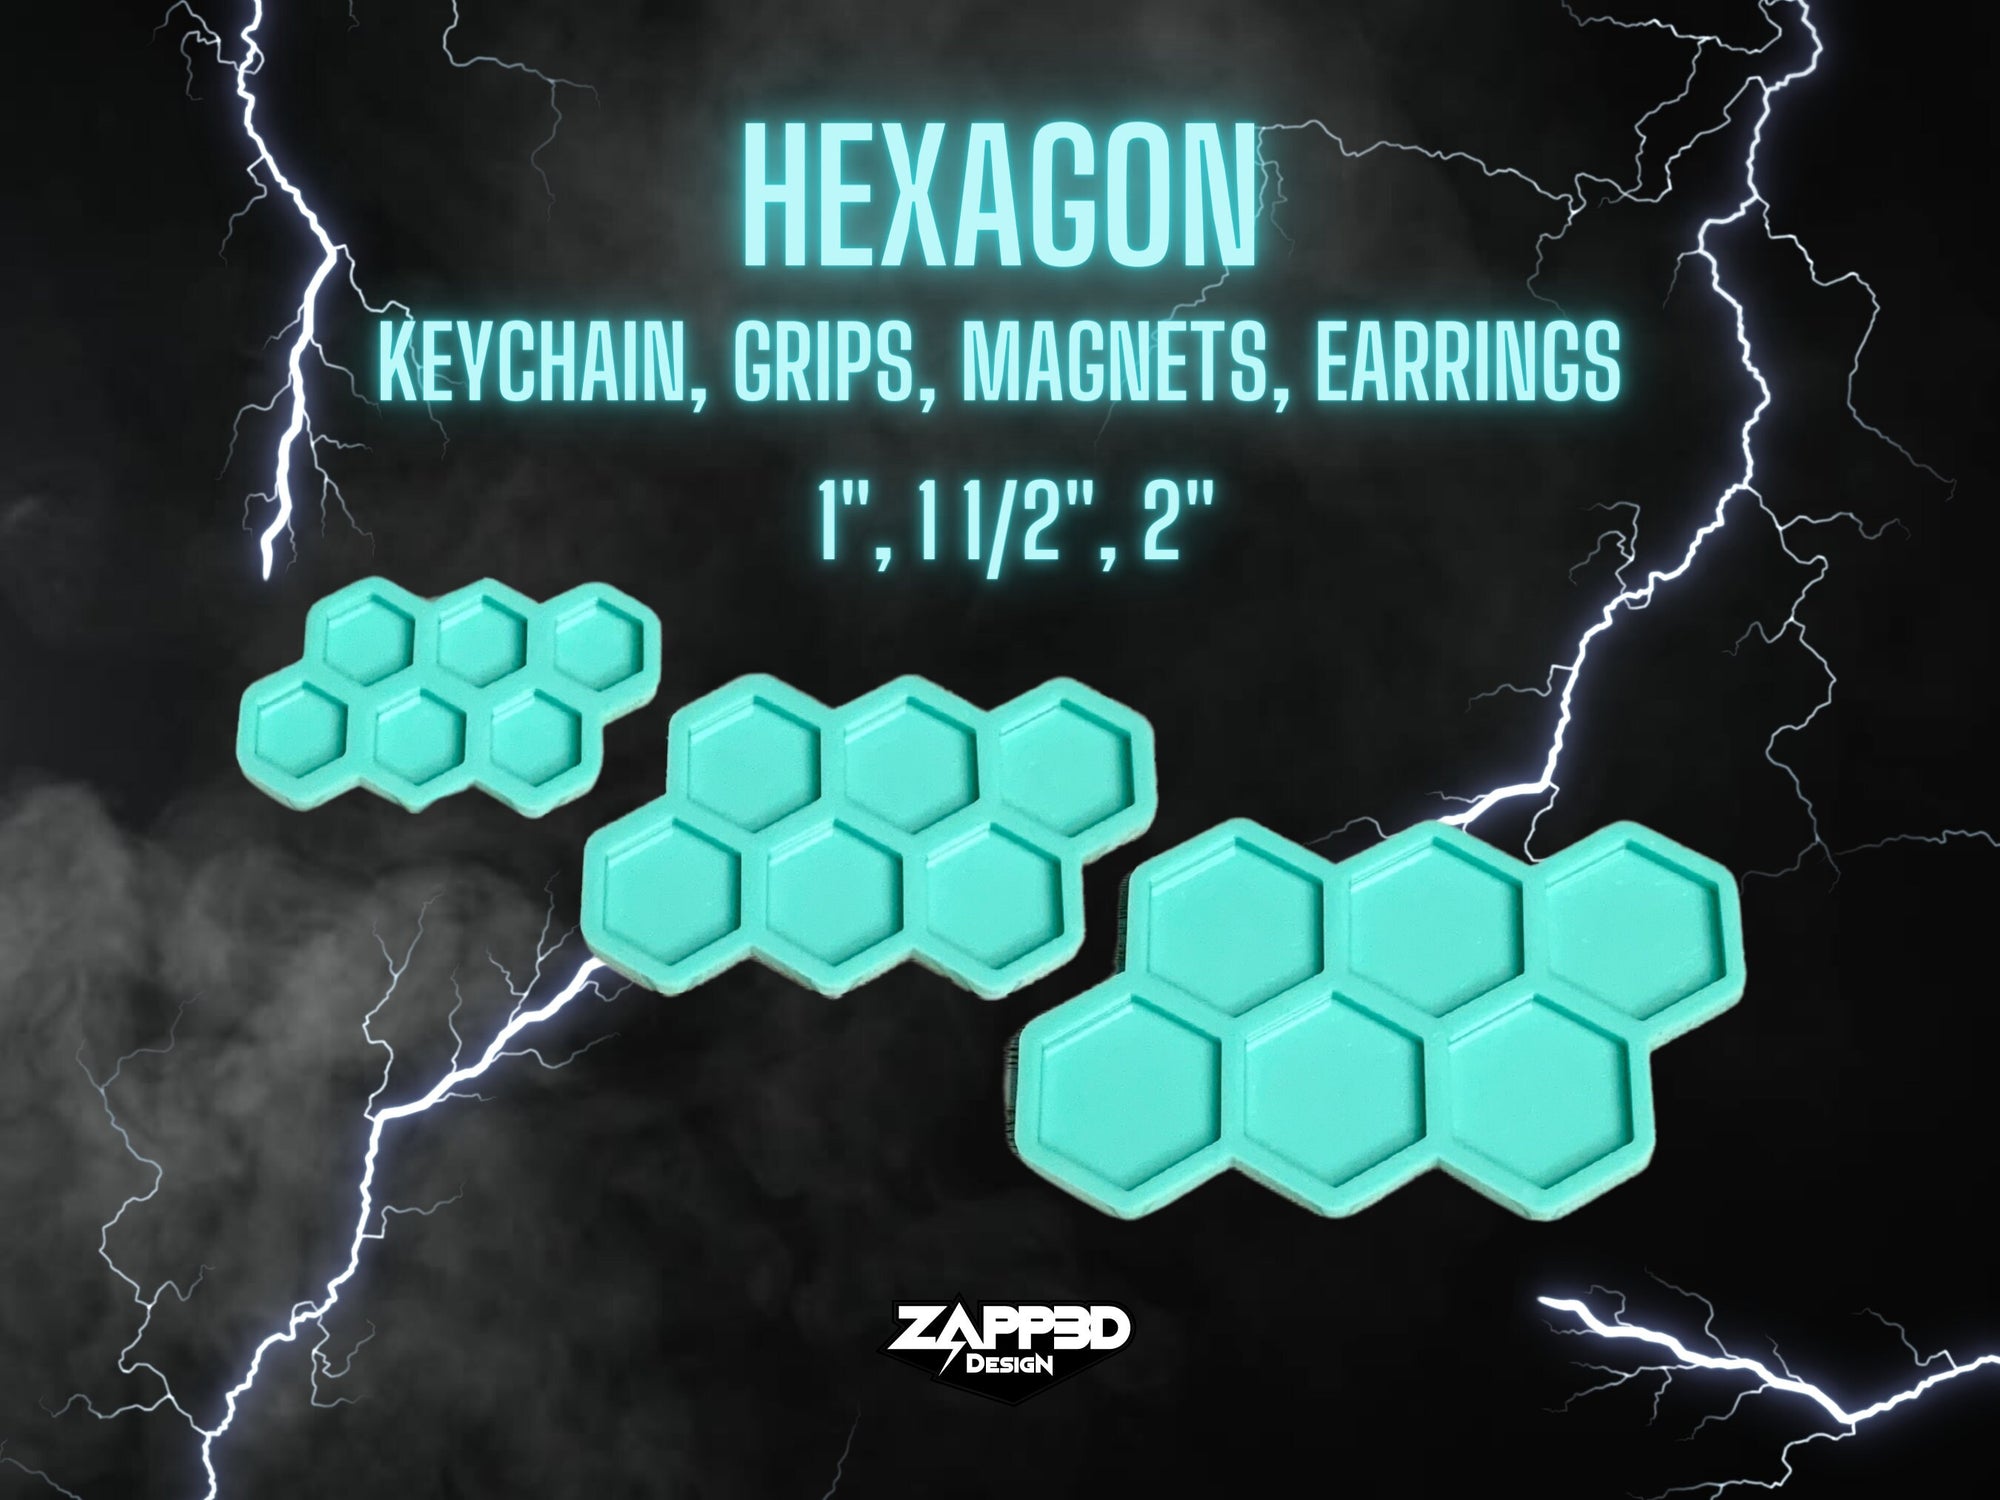 Hexagon Mold | 3 SIZES | Hexagon Earring Mold, Hexagon Keychain Mold, Grip Mold, Magnet Mold